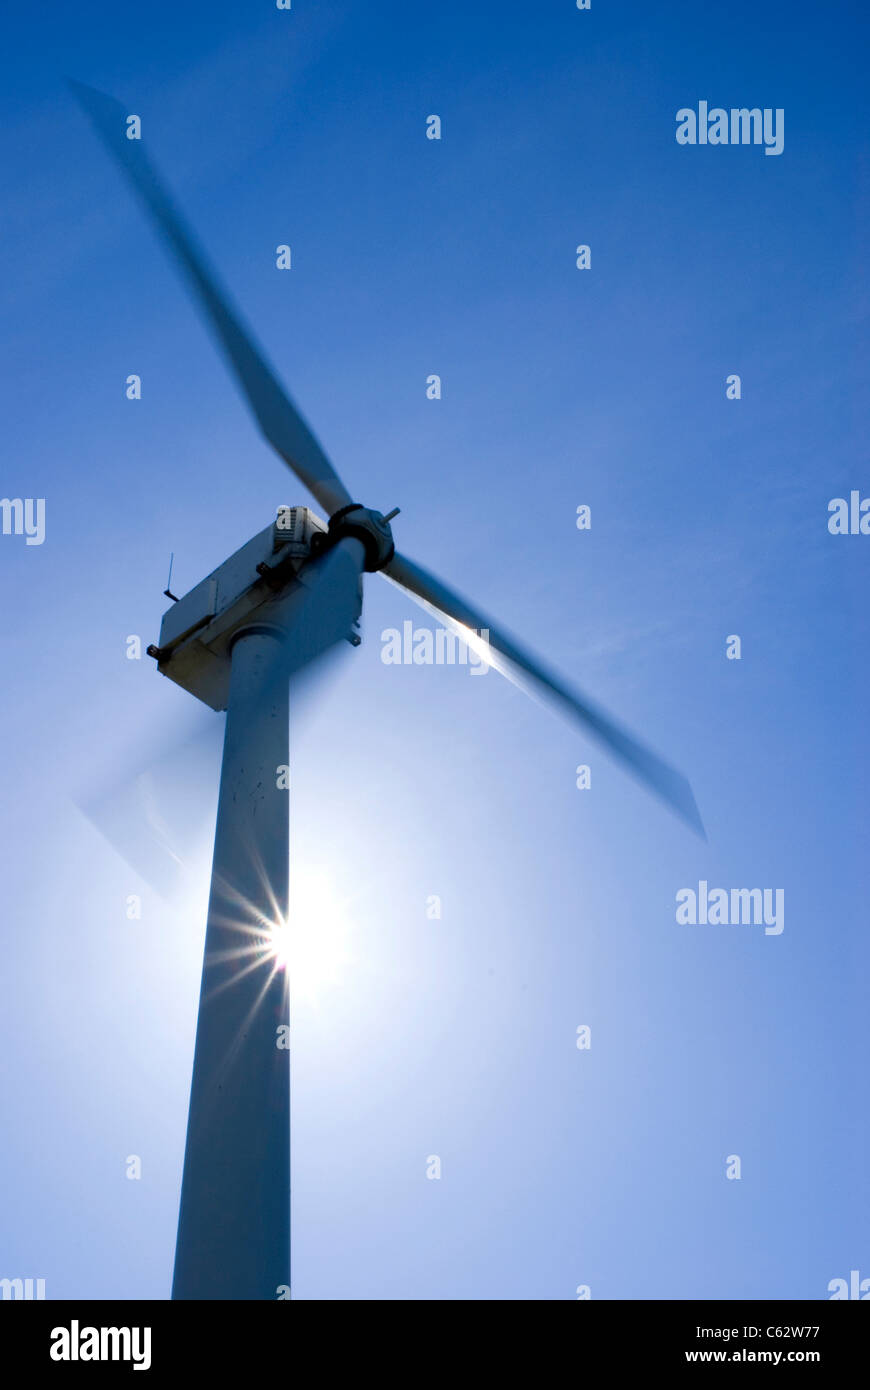 Spinning wind turbine with sun behind it Stock Photo